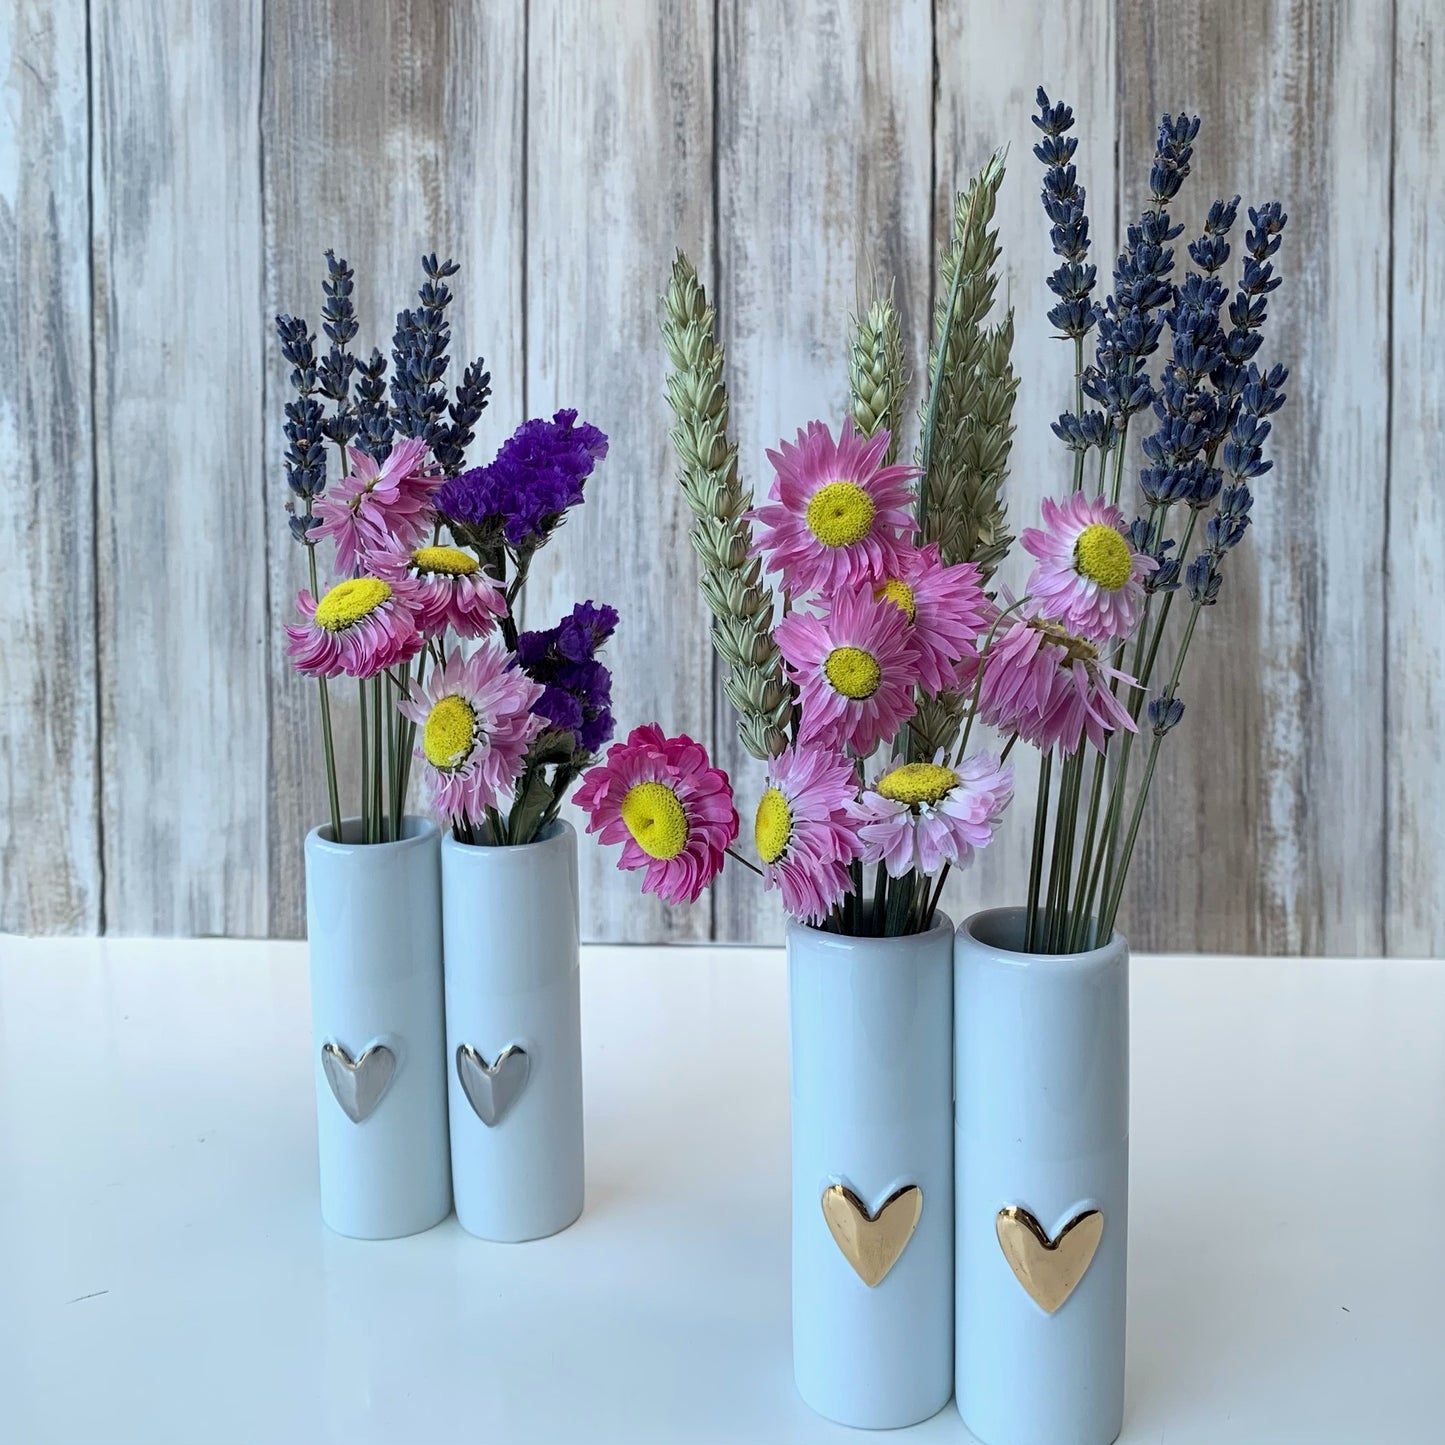 Love Heart Mini Vases - Set of 2